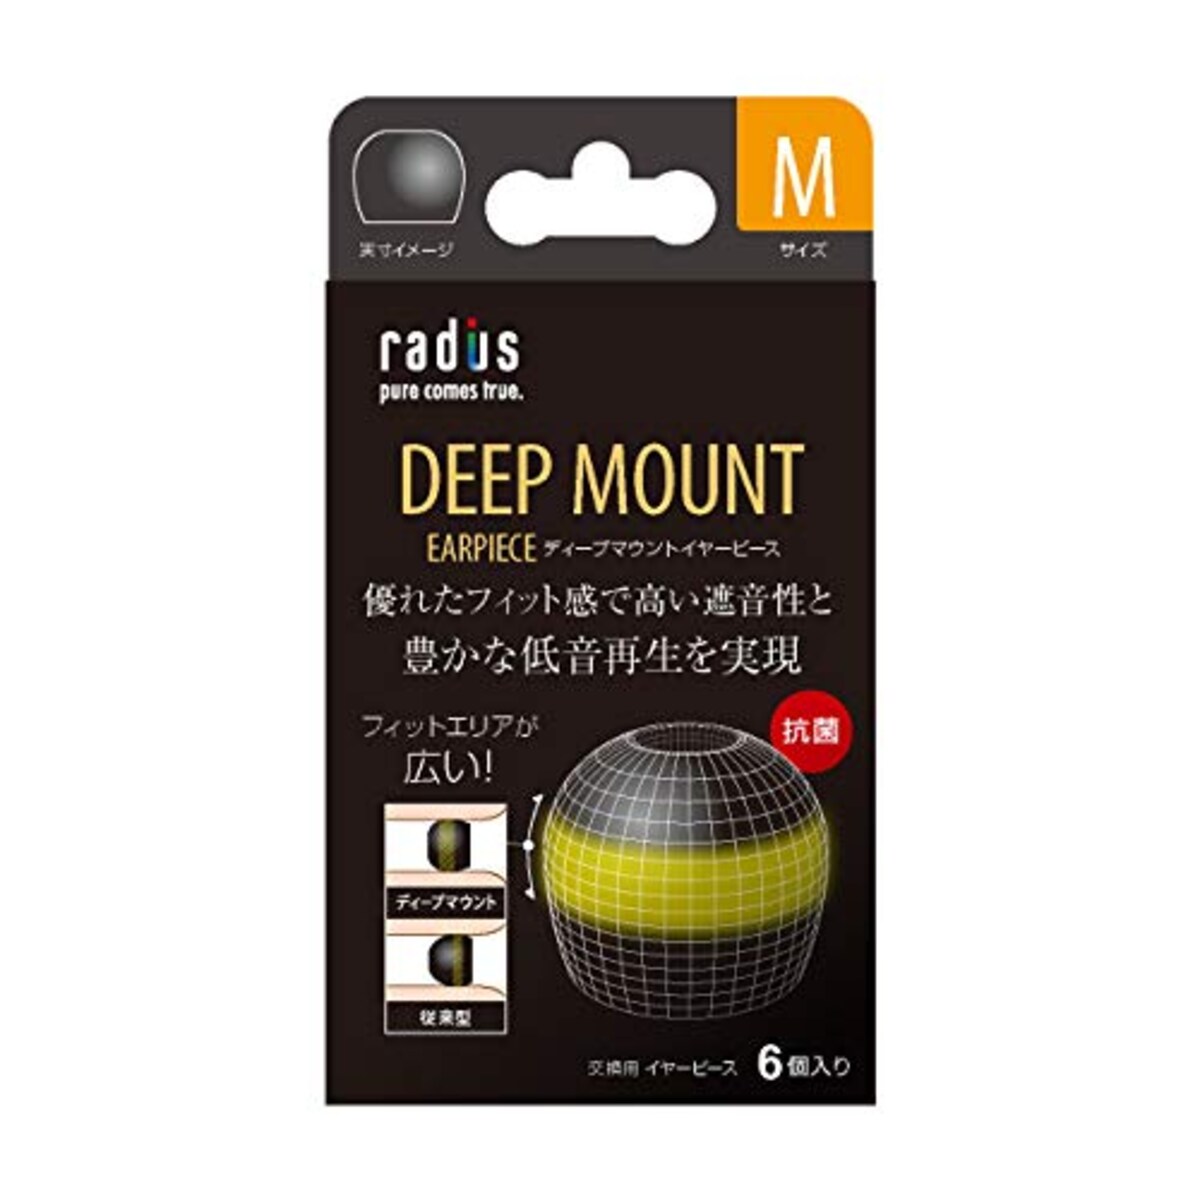 DEEP MOUNT EARPIECEディープマウントイヤーピース【Mサイズ×3セット】